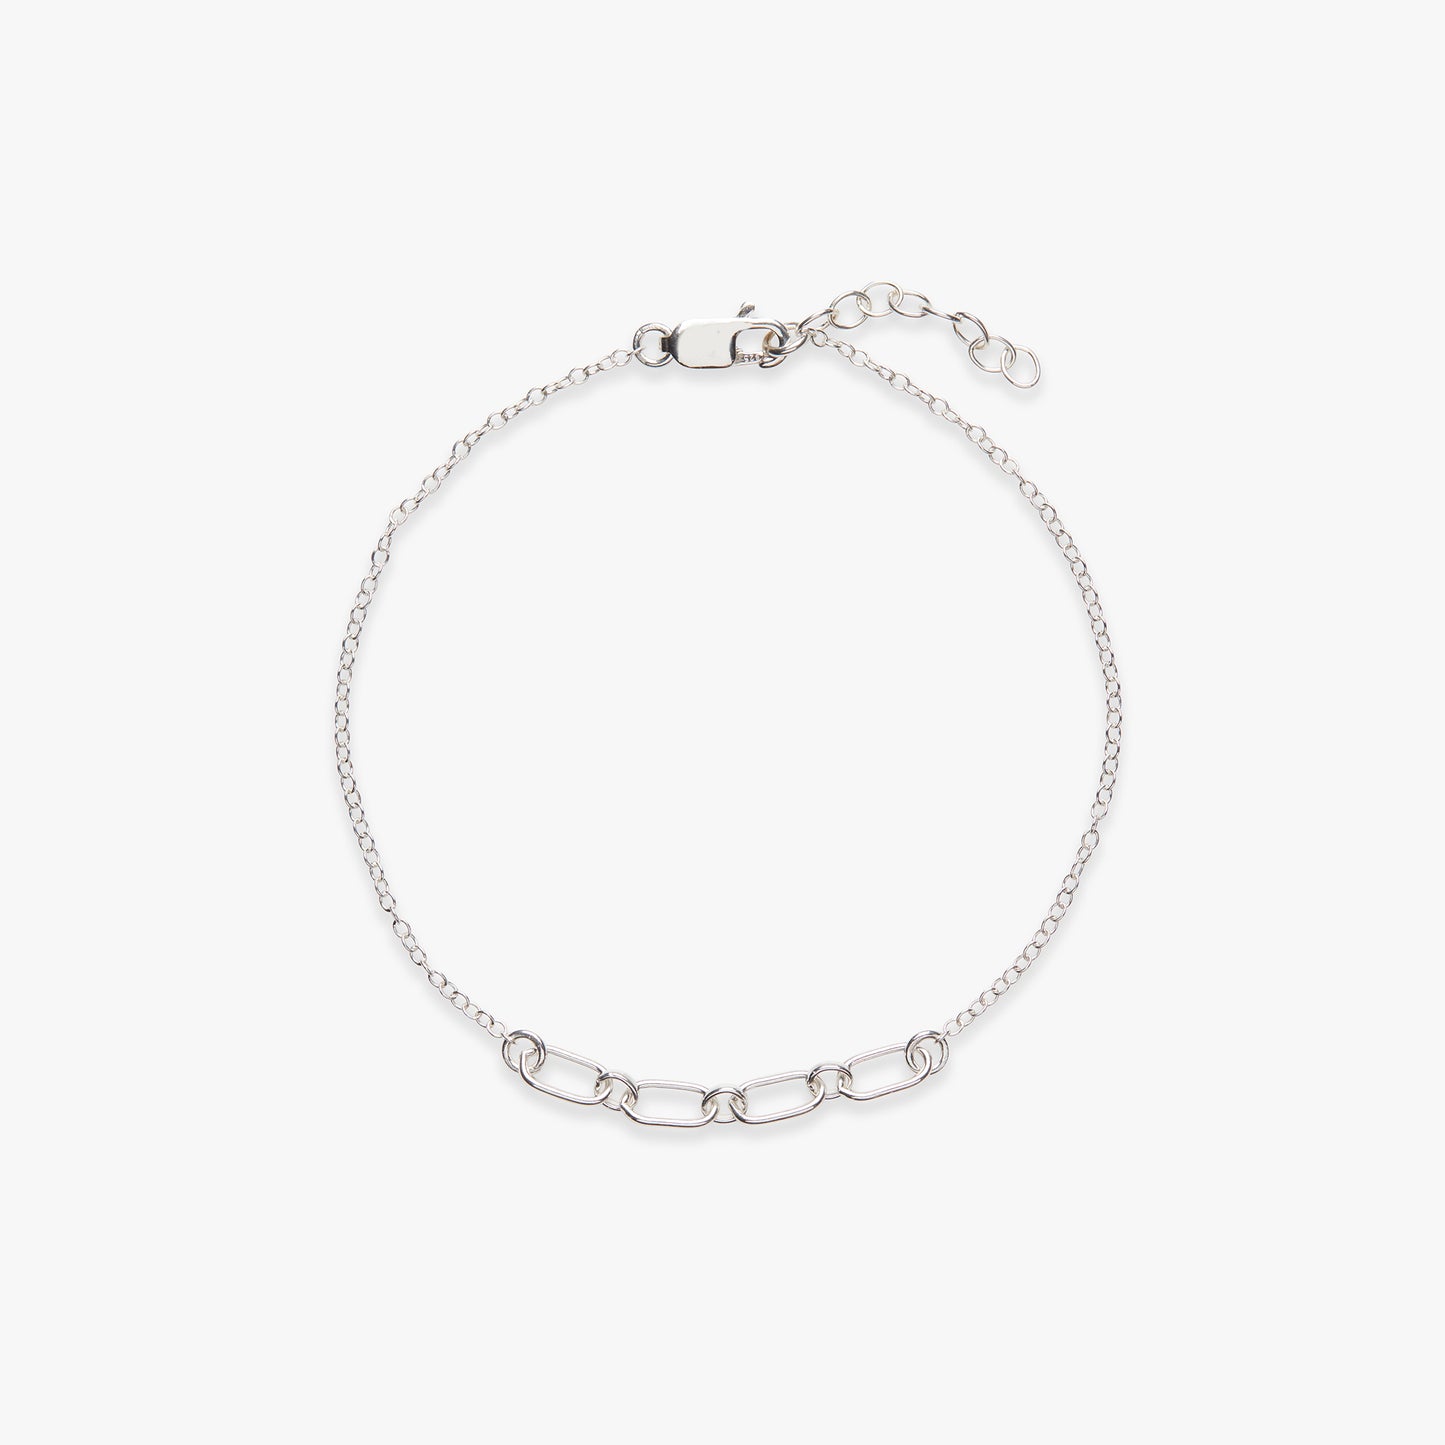 Oval links chain bracelet silver